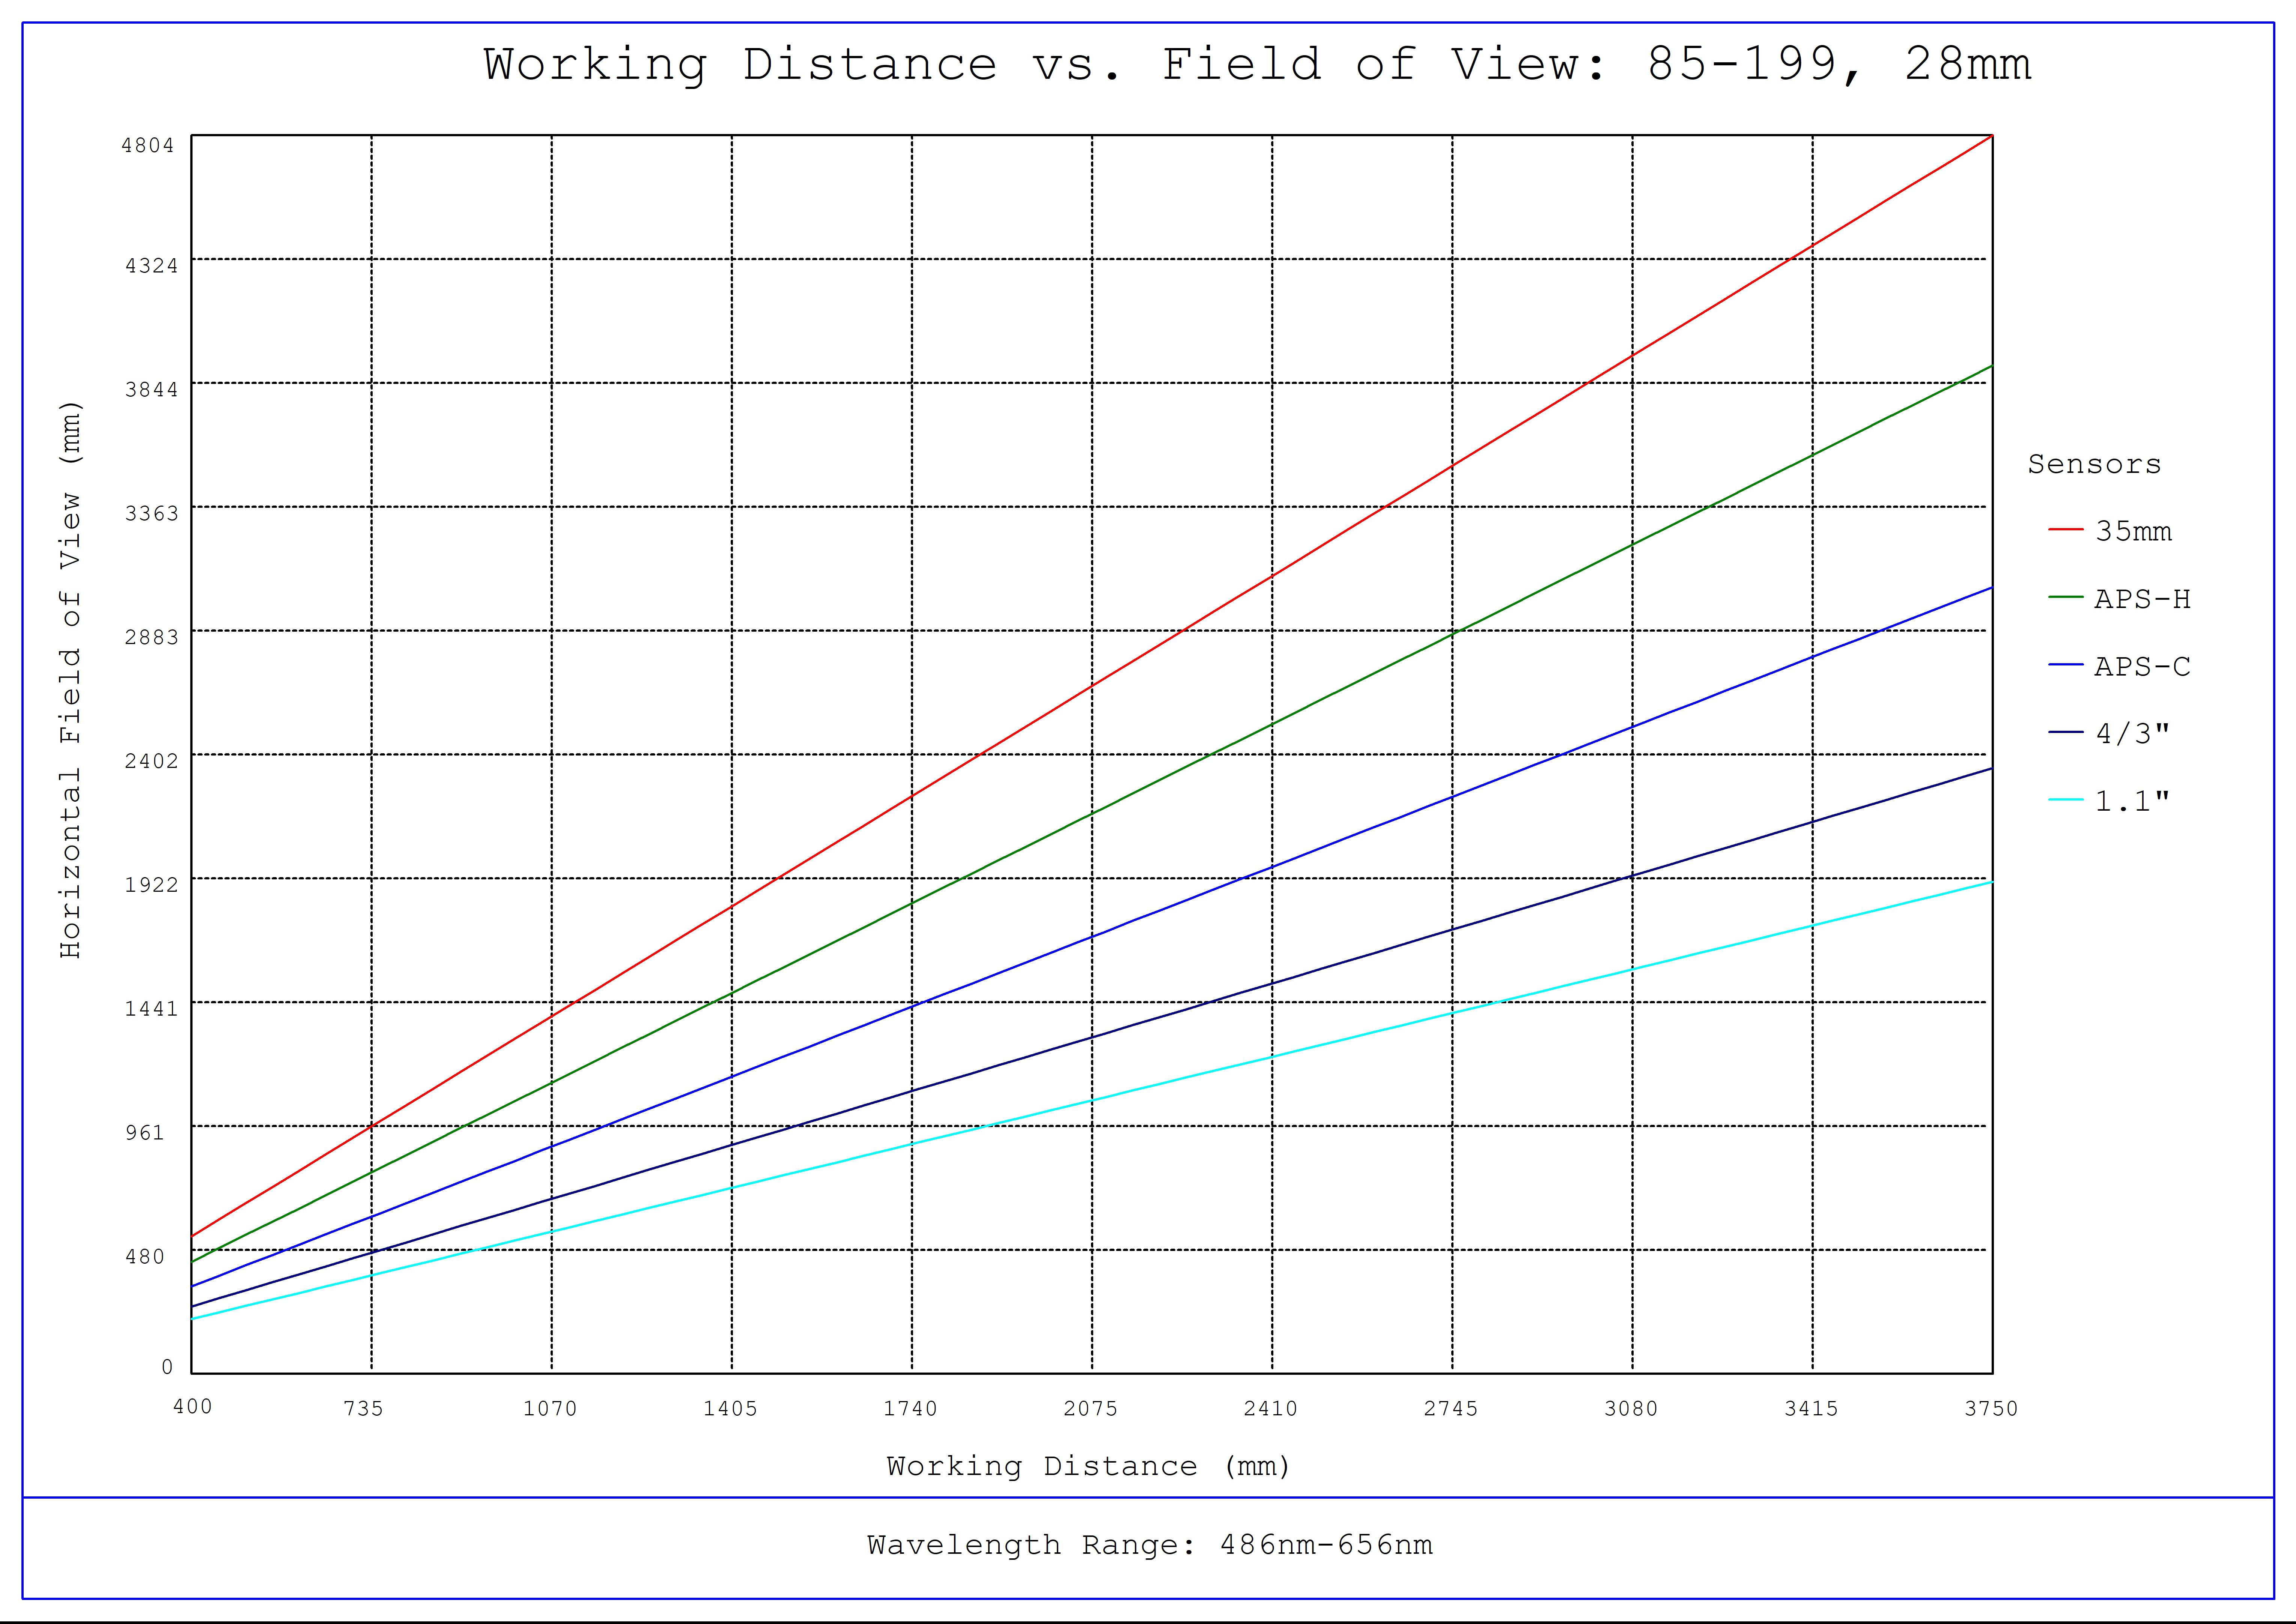 #85-199, 28mm Short Working Distance, LF Series Fixed Focal Length Lens, Working Distance versus Field of View Plot